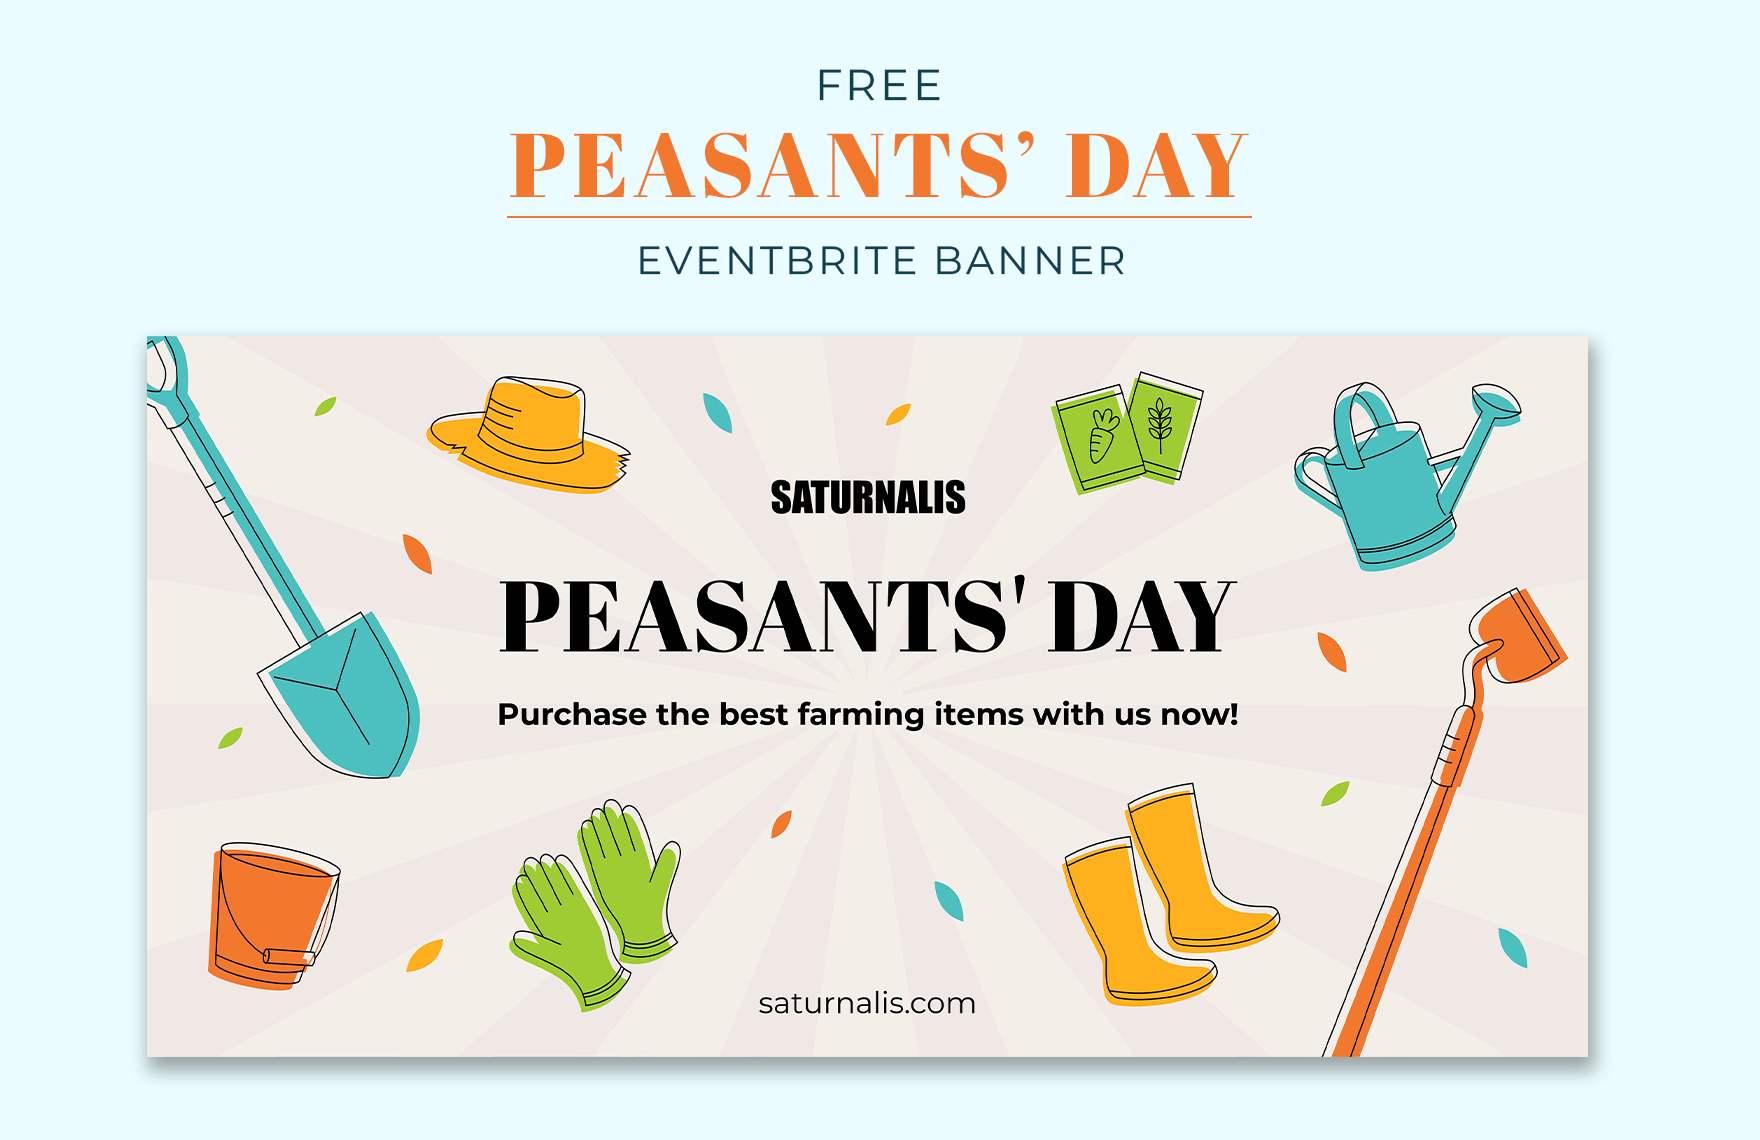 Peasant's Day Eventbrite Banner